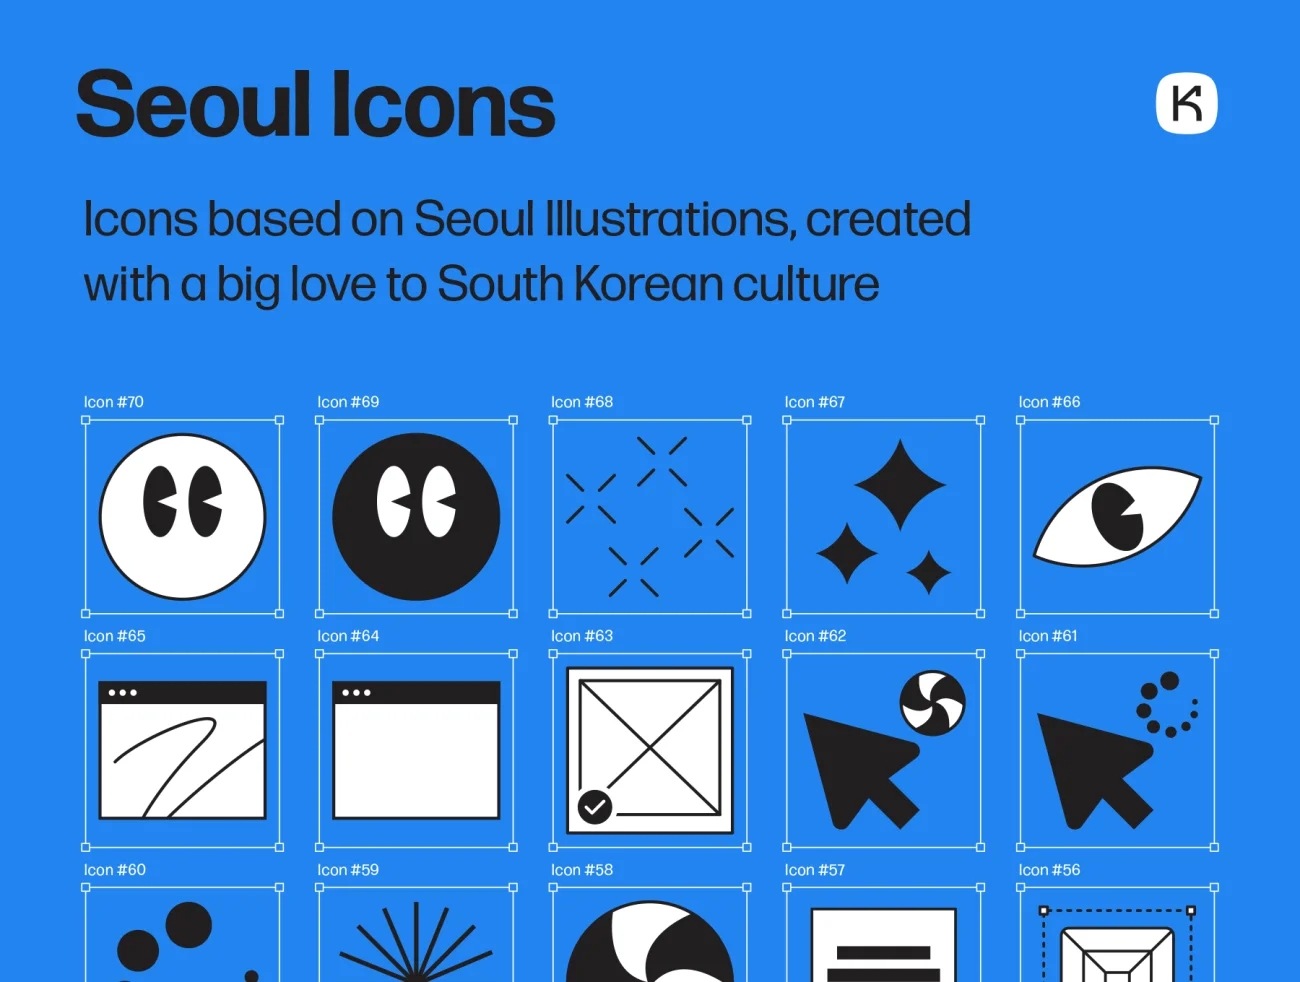 首尔轮廓图标 Seoul Icons sketch, psd, ai, After Effects, powerpoint, xd, figma格式缩略图到位啦UI